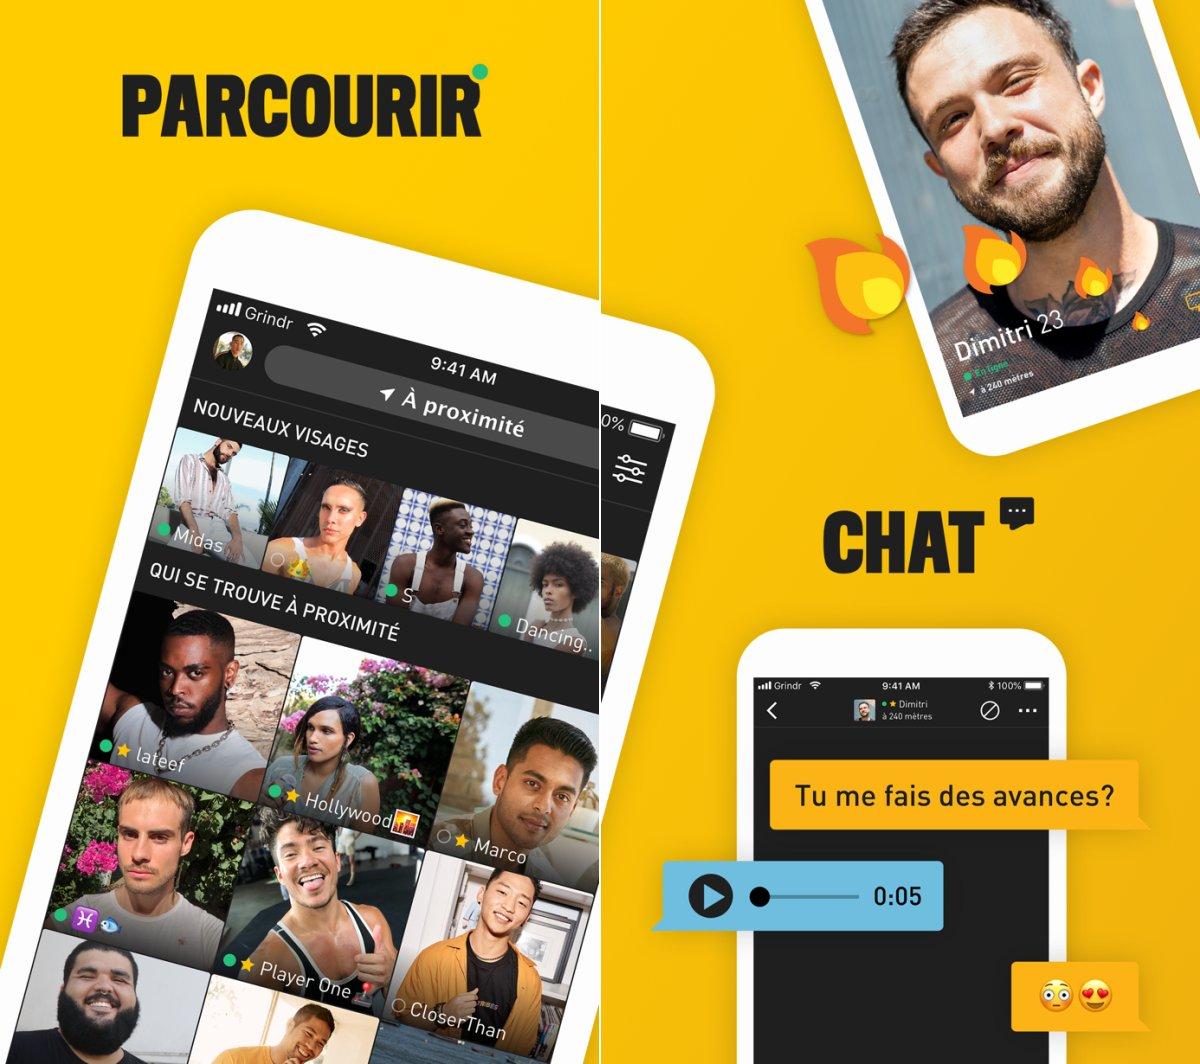 grindr ipa iphone ipad gay chat capture app